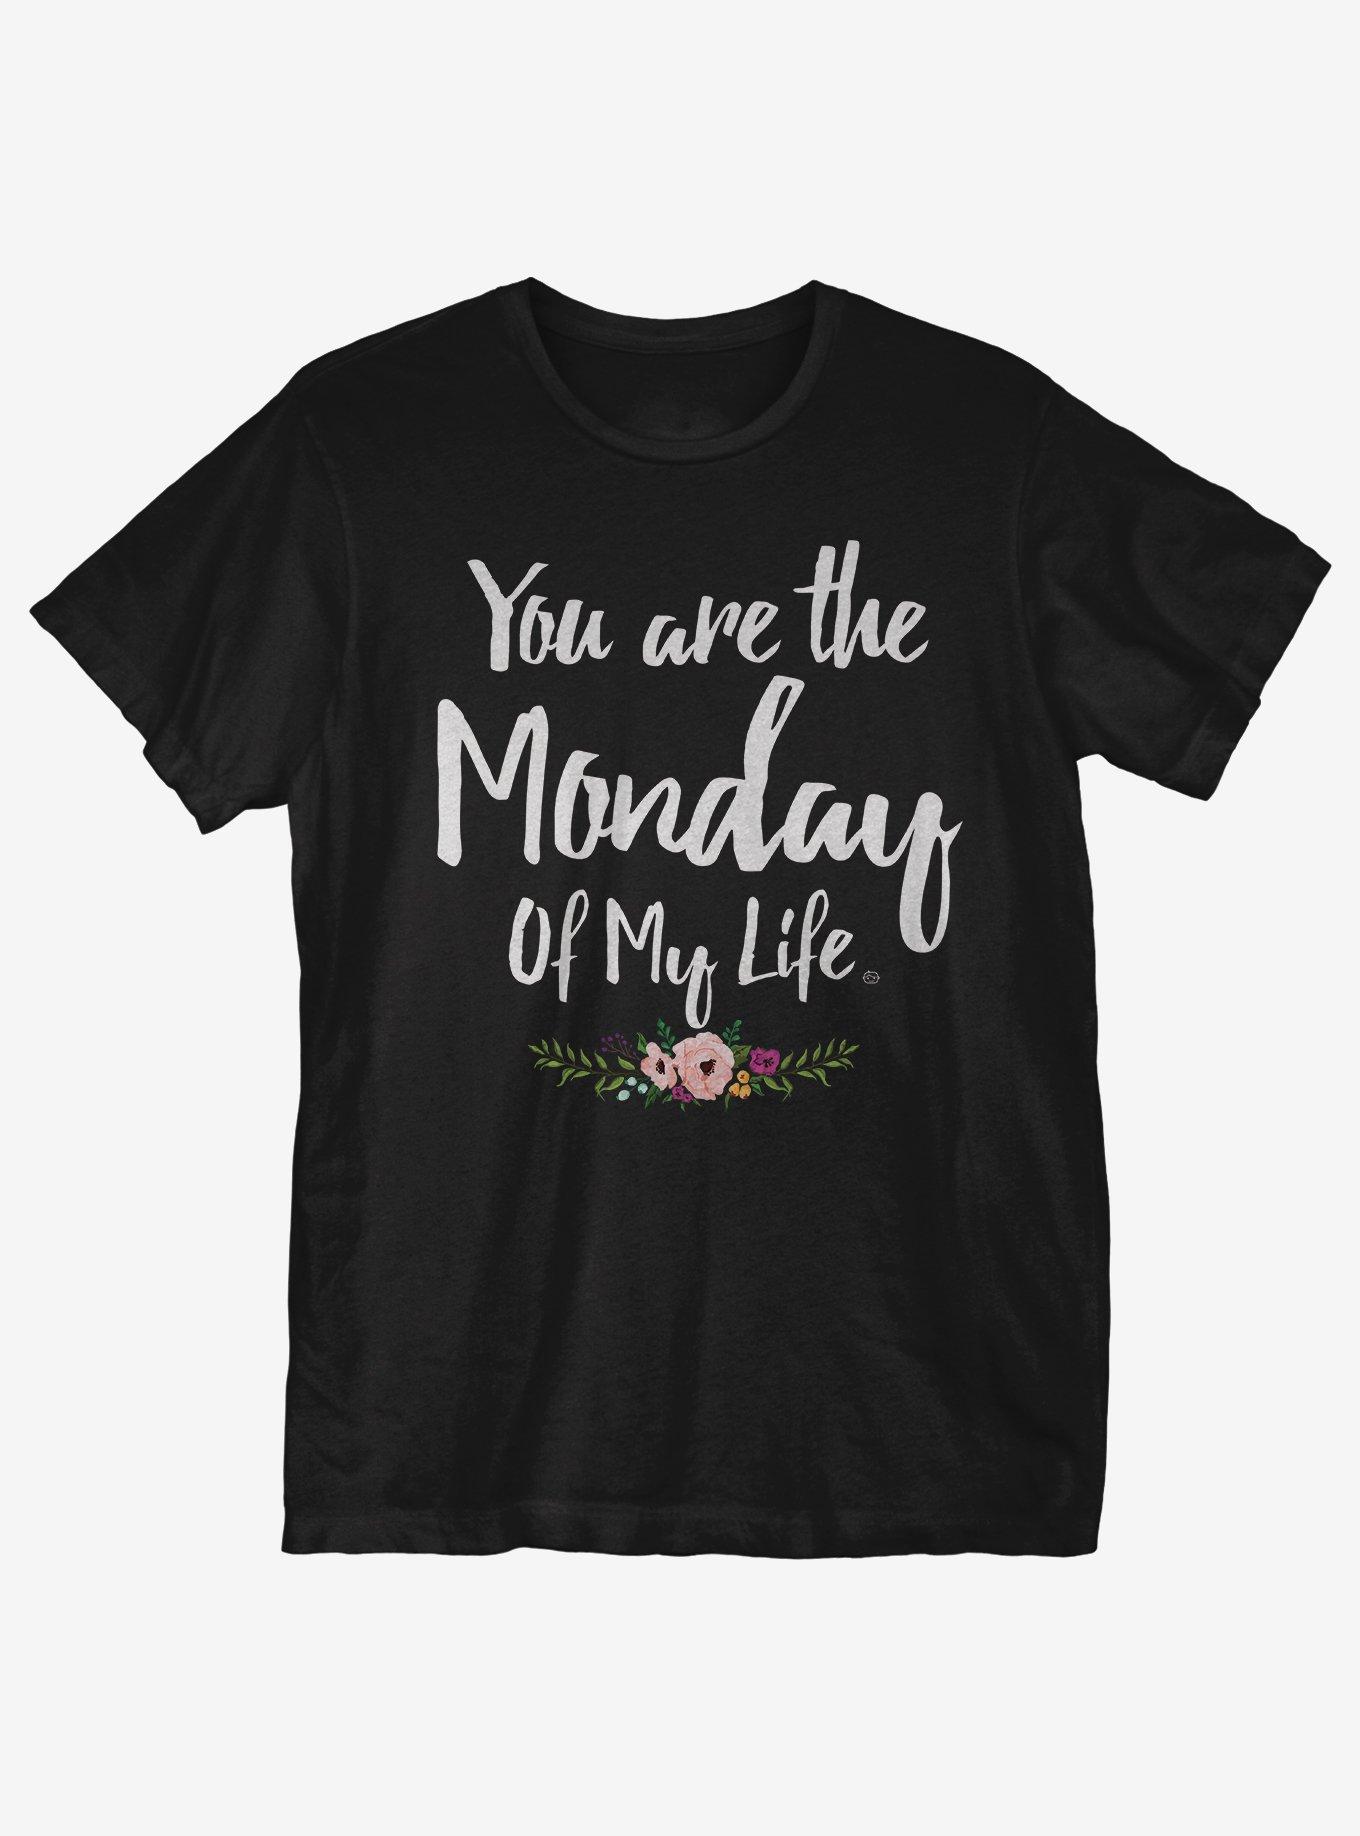 Monday Of My Life T-Shirt